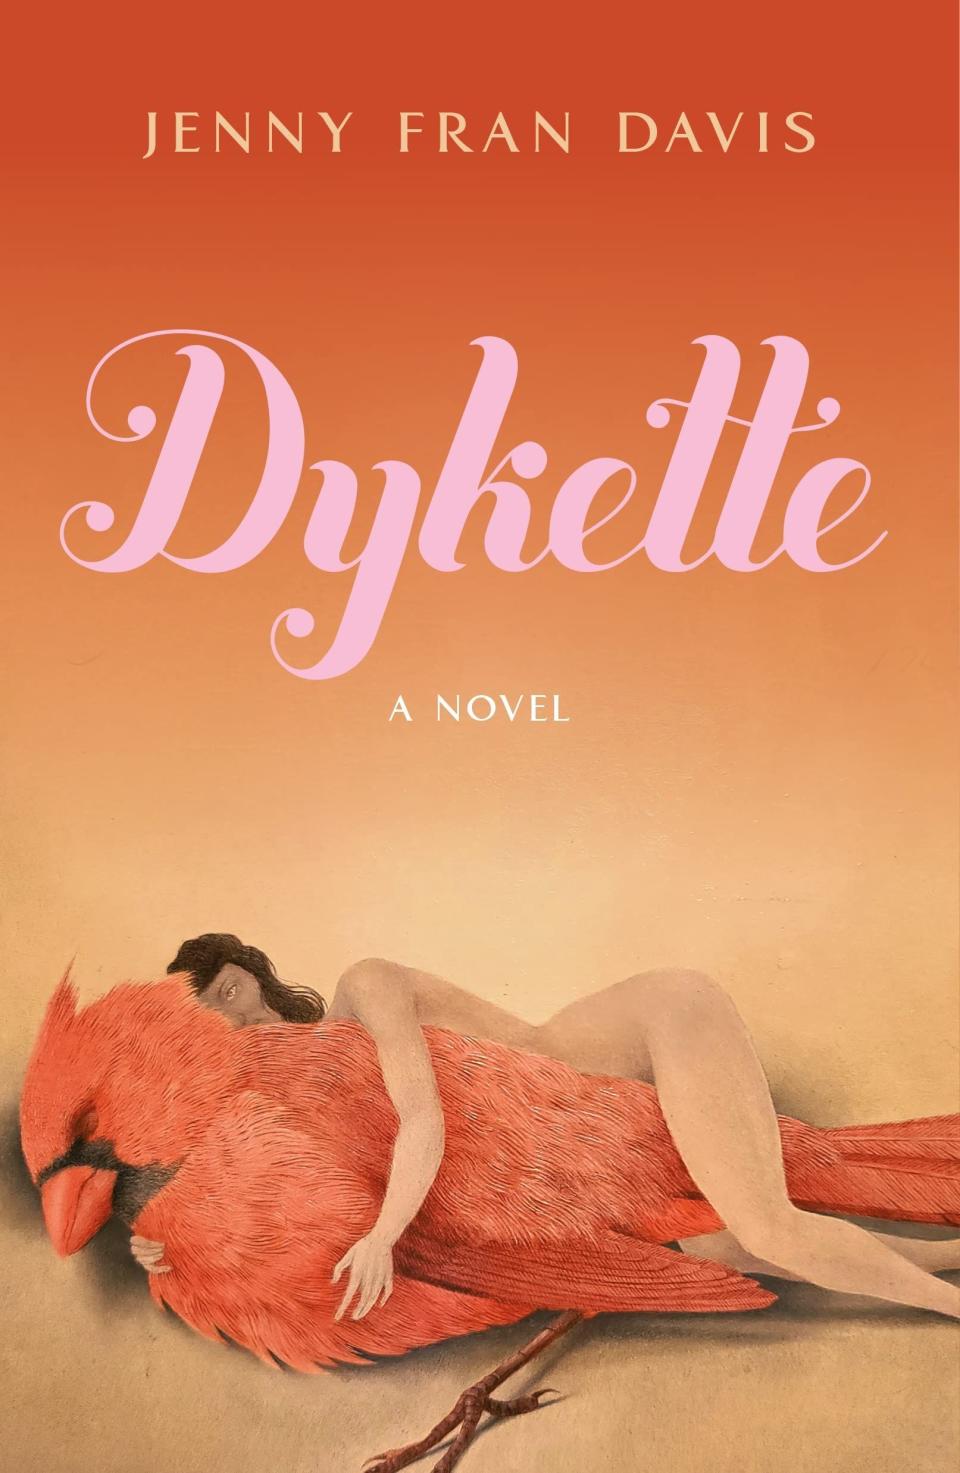 15) Dykette: A Novel